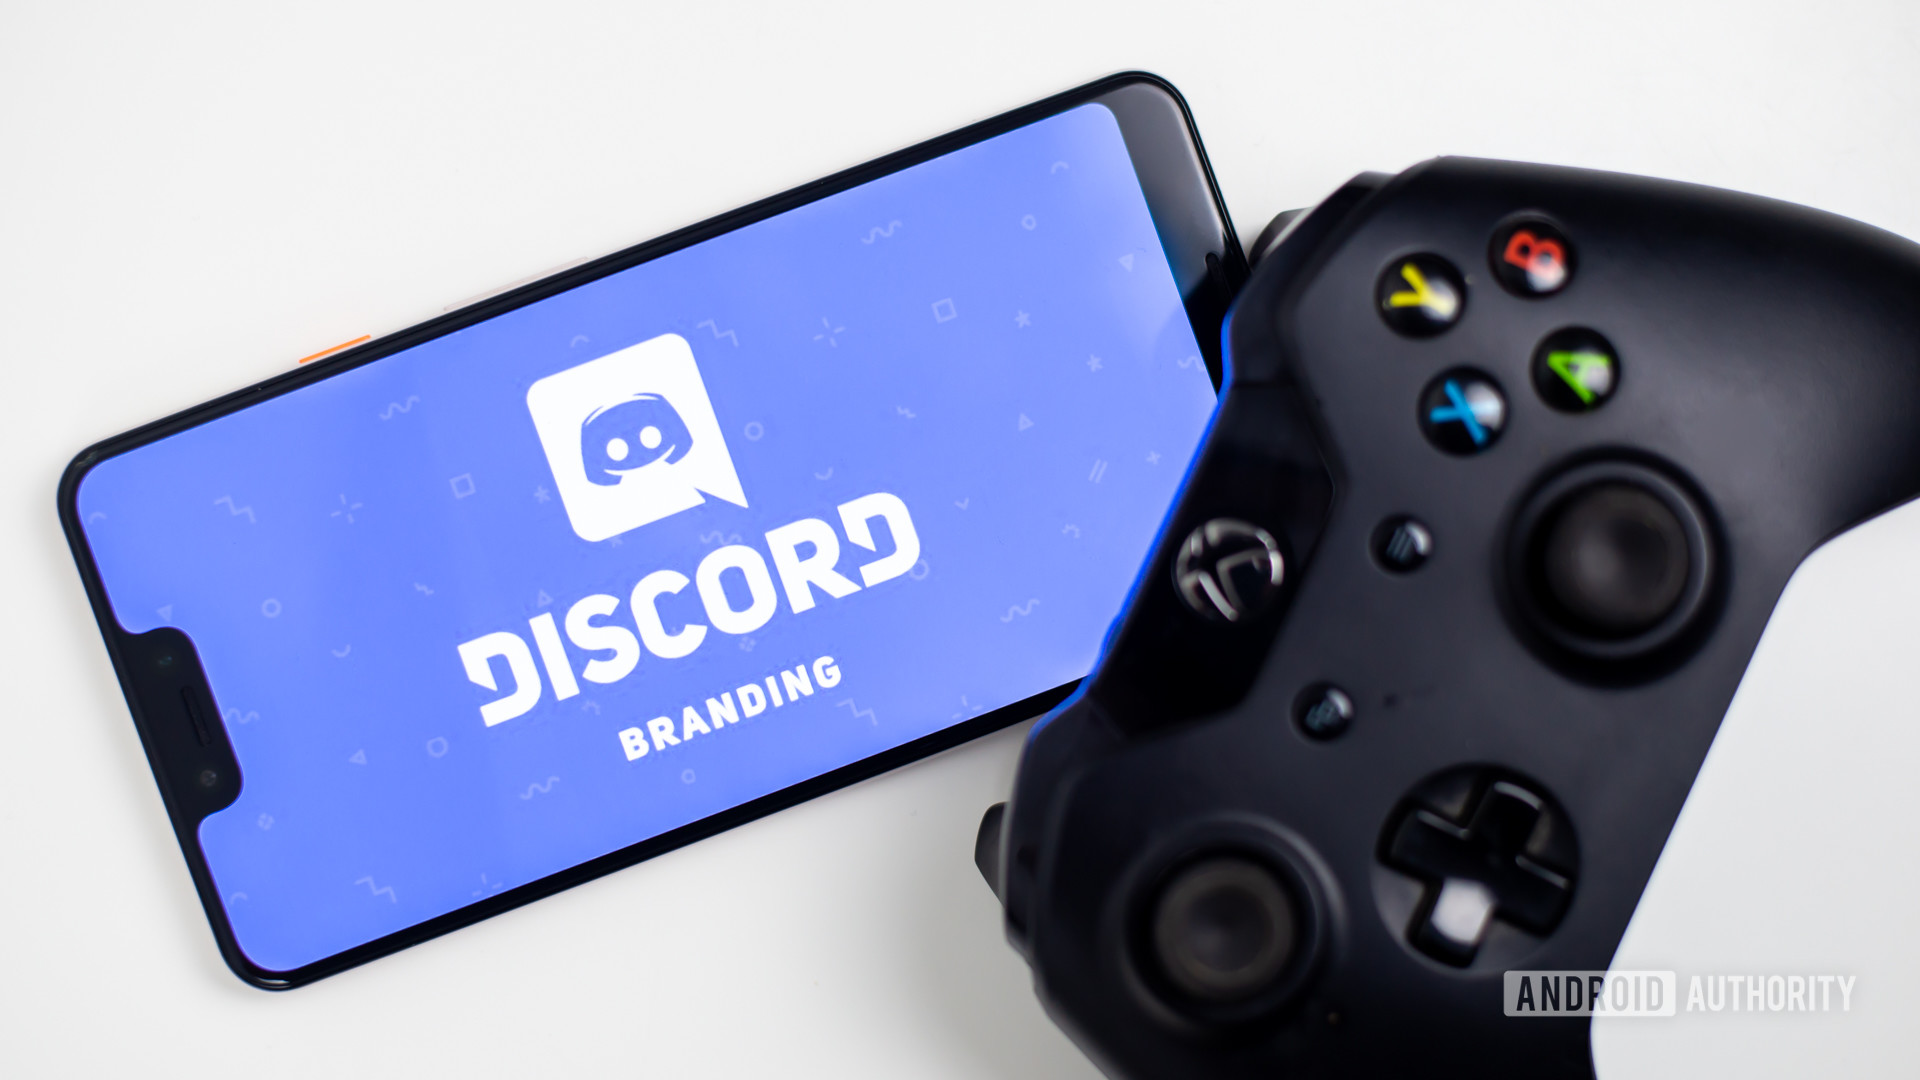 Discord on smartphone next to gamepad stock photo 3